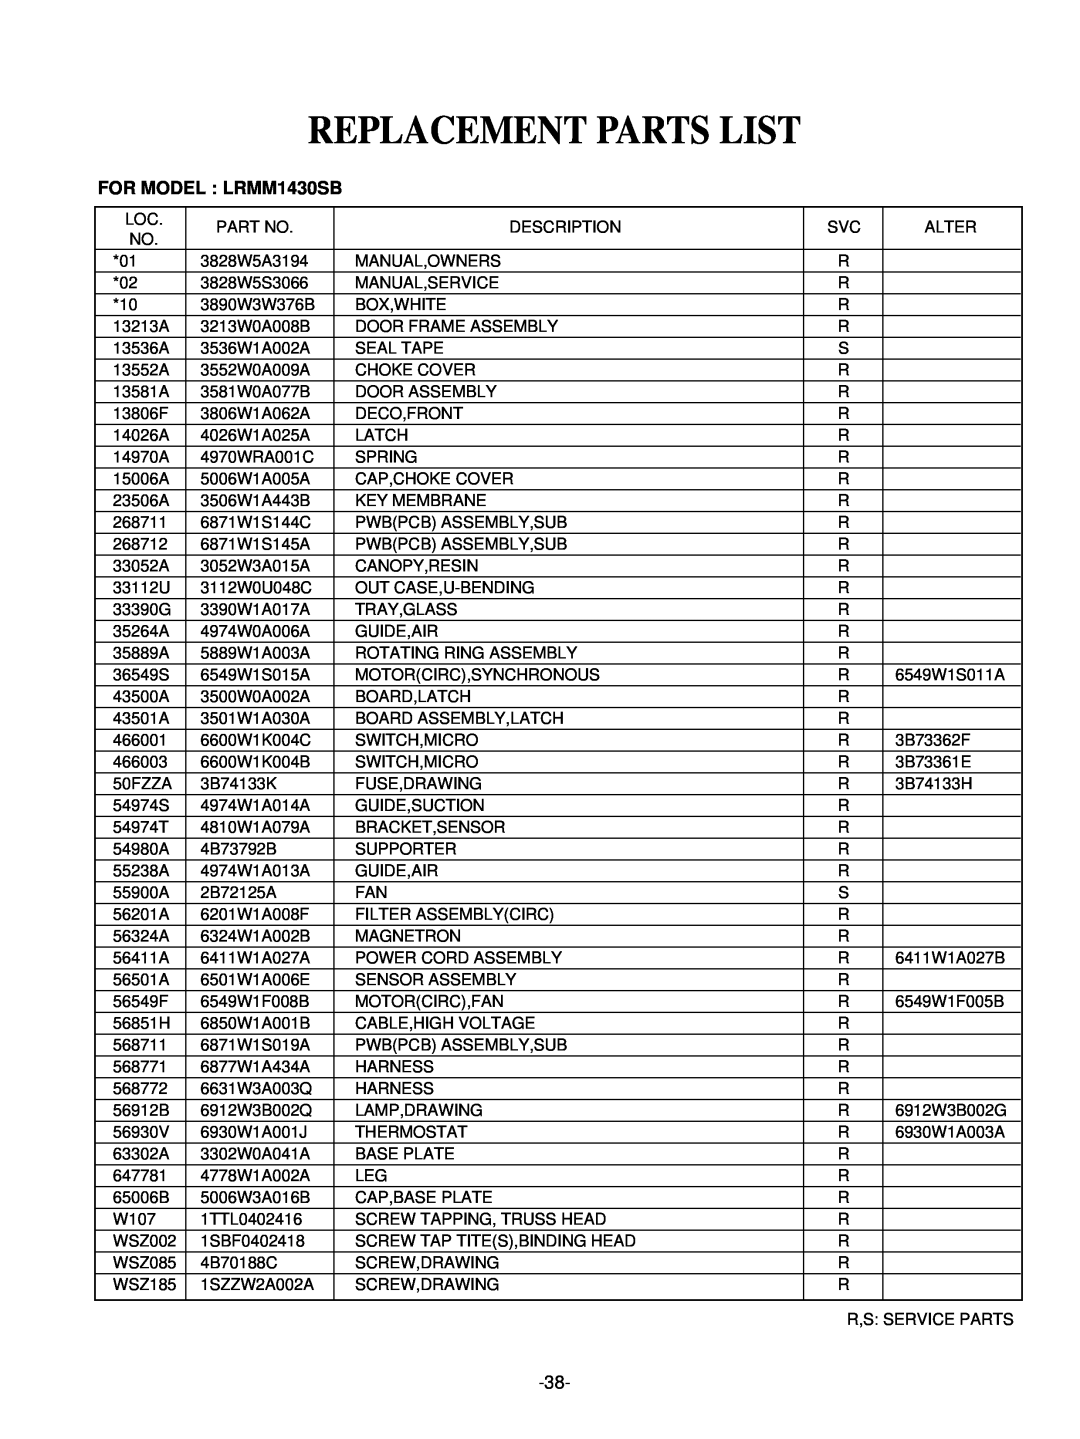 LG Electronics LRMM1430SW manual Replacement Parts List, FOR MODEL LRMM1430SB 